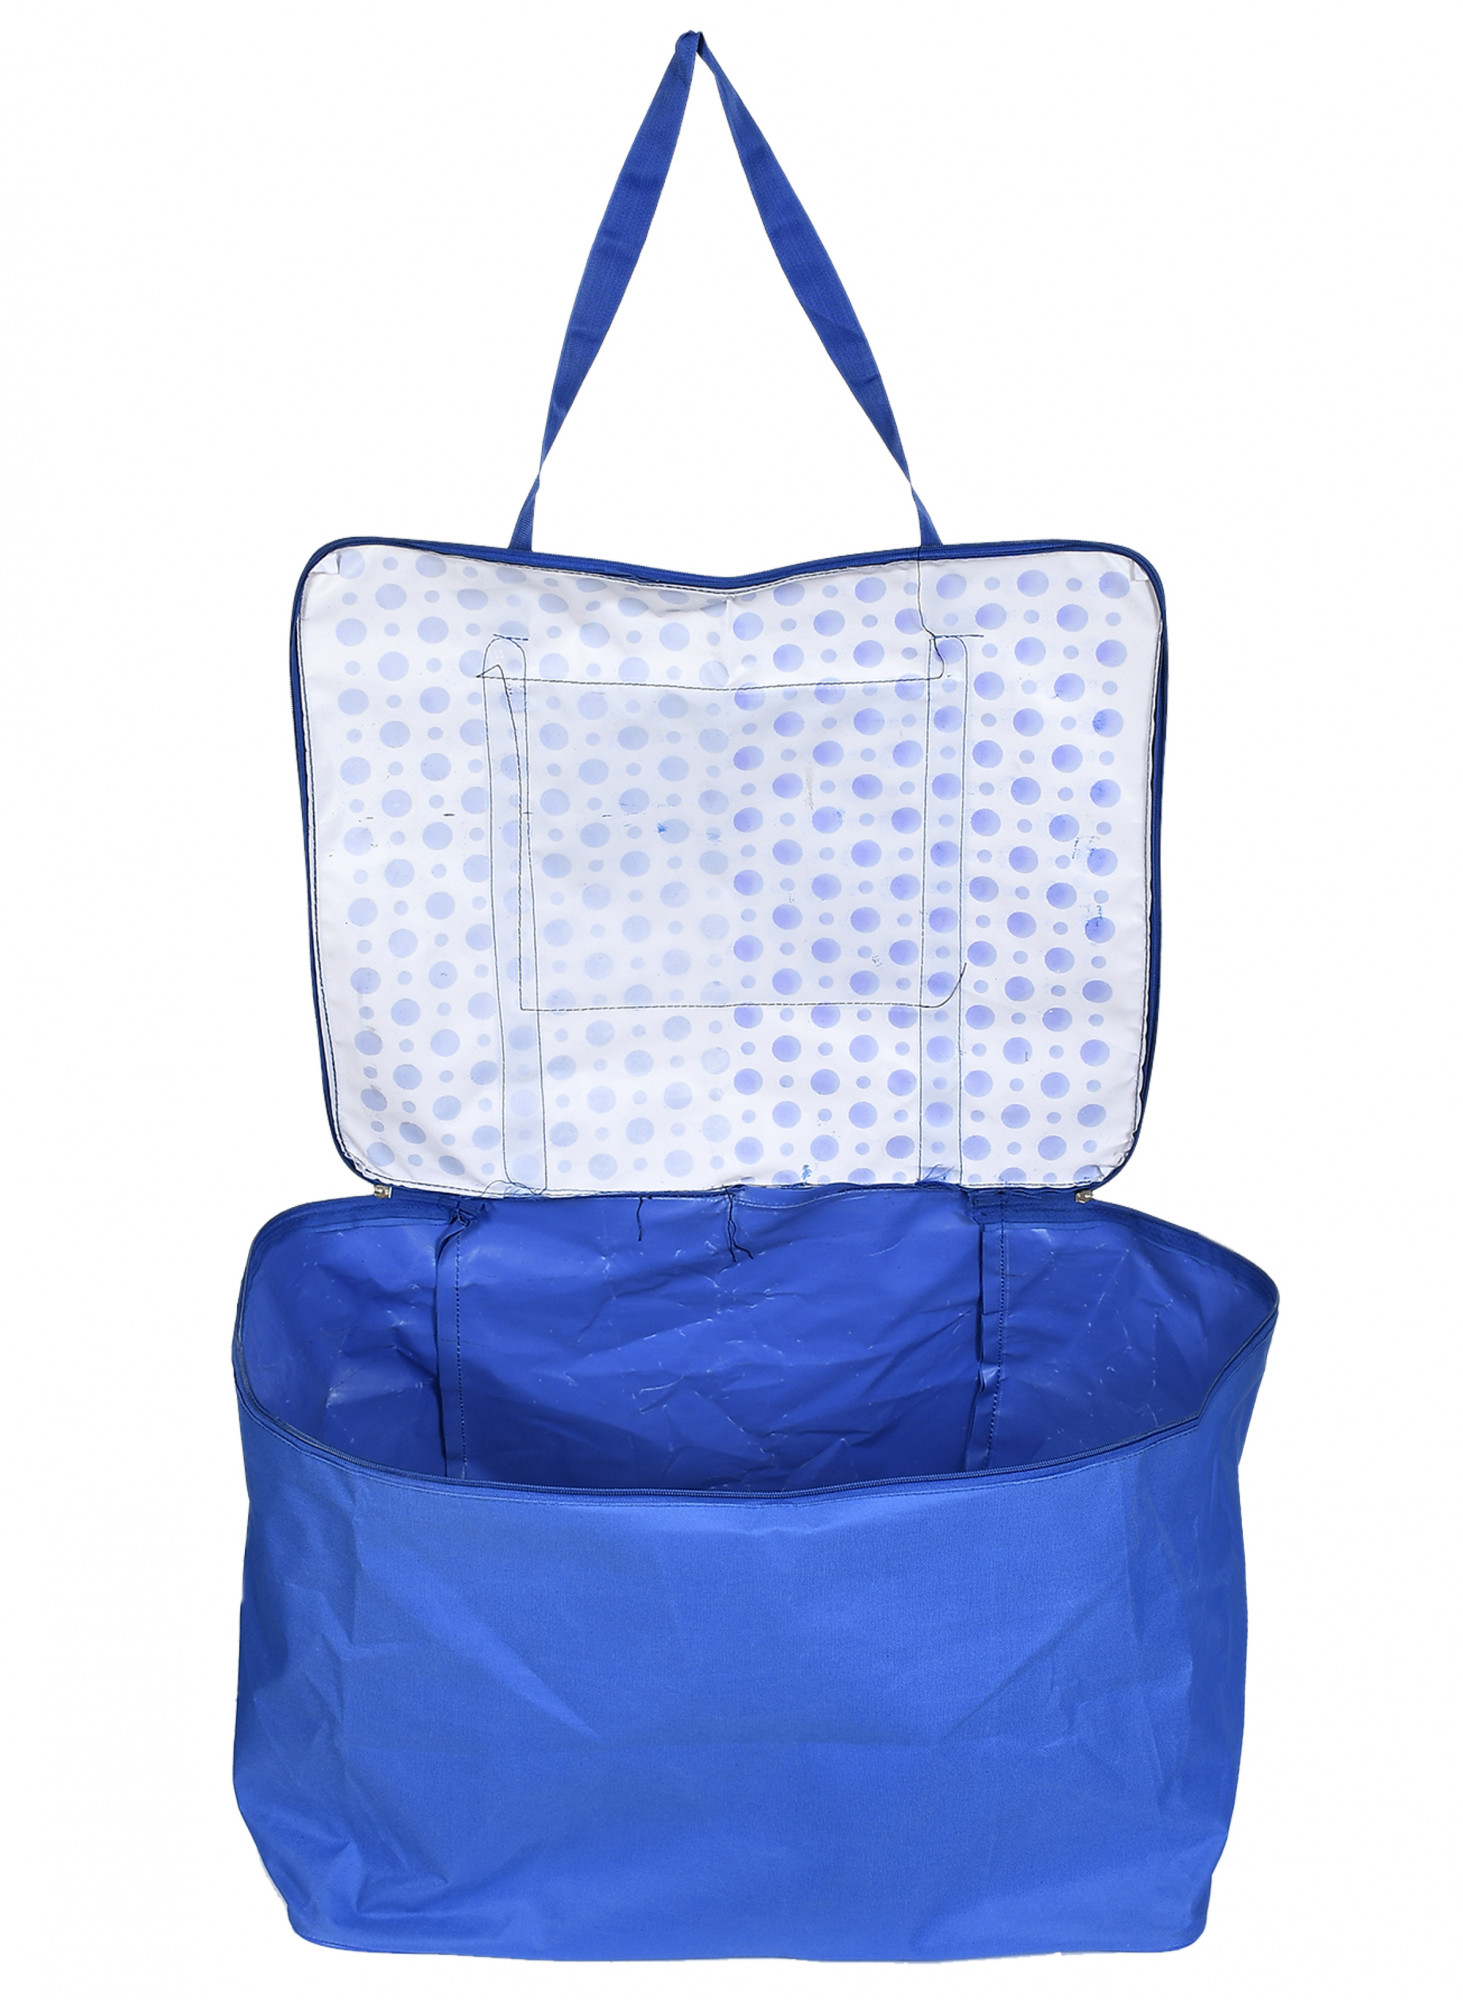 Kuber Industries Dot Printed Large Size Foldable Travel Duffle Bag, Underbed Storage Bag, Wardrobe organizer, Cloth Bag,Hospital Bag, Weekender Bag, Overnight Bag, Carry On Bag, Luggage And Sports Duffle Bag (Blue & White)